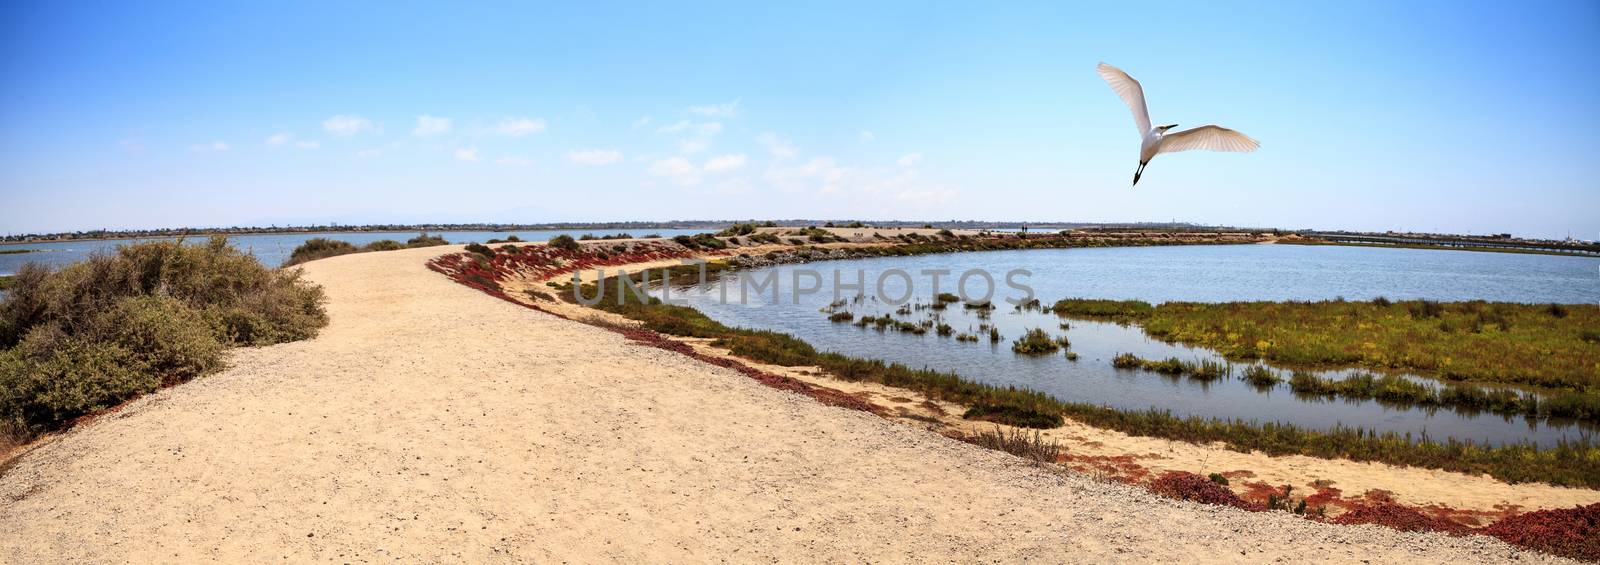 Path along the peaceful and tranquil marsh of Bolsa Chica wetlands in Huntington Beach, California, USA